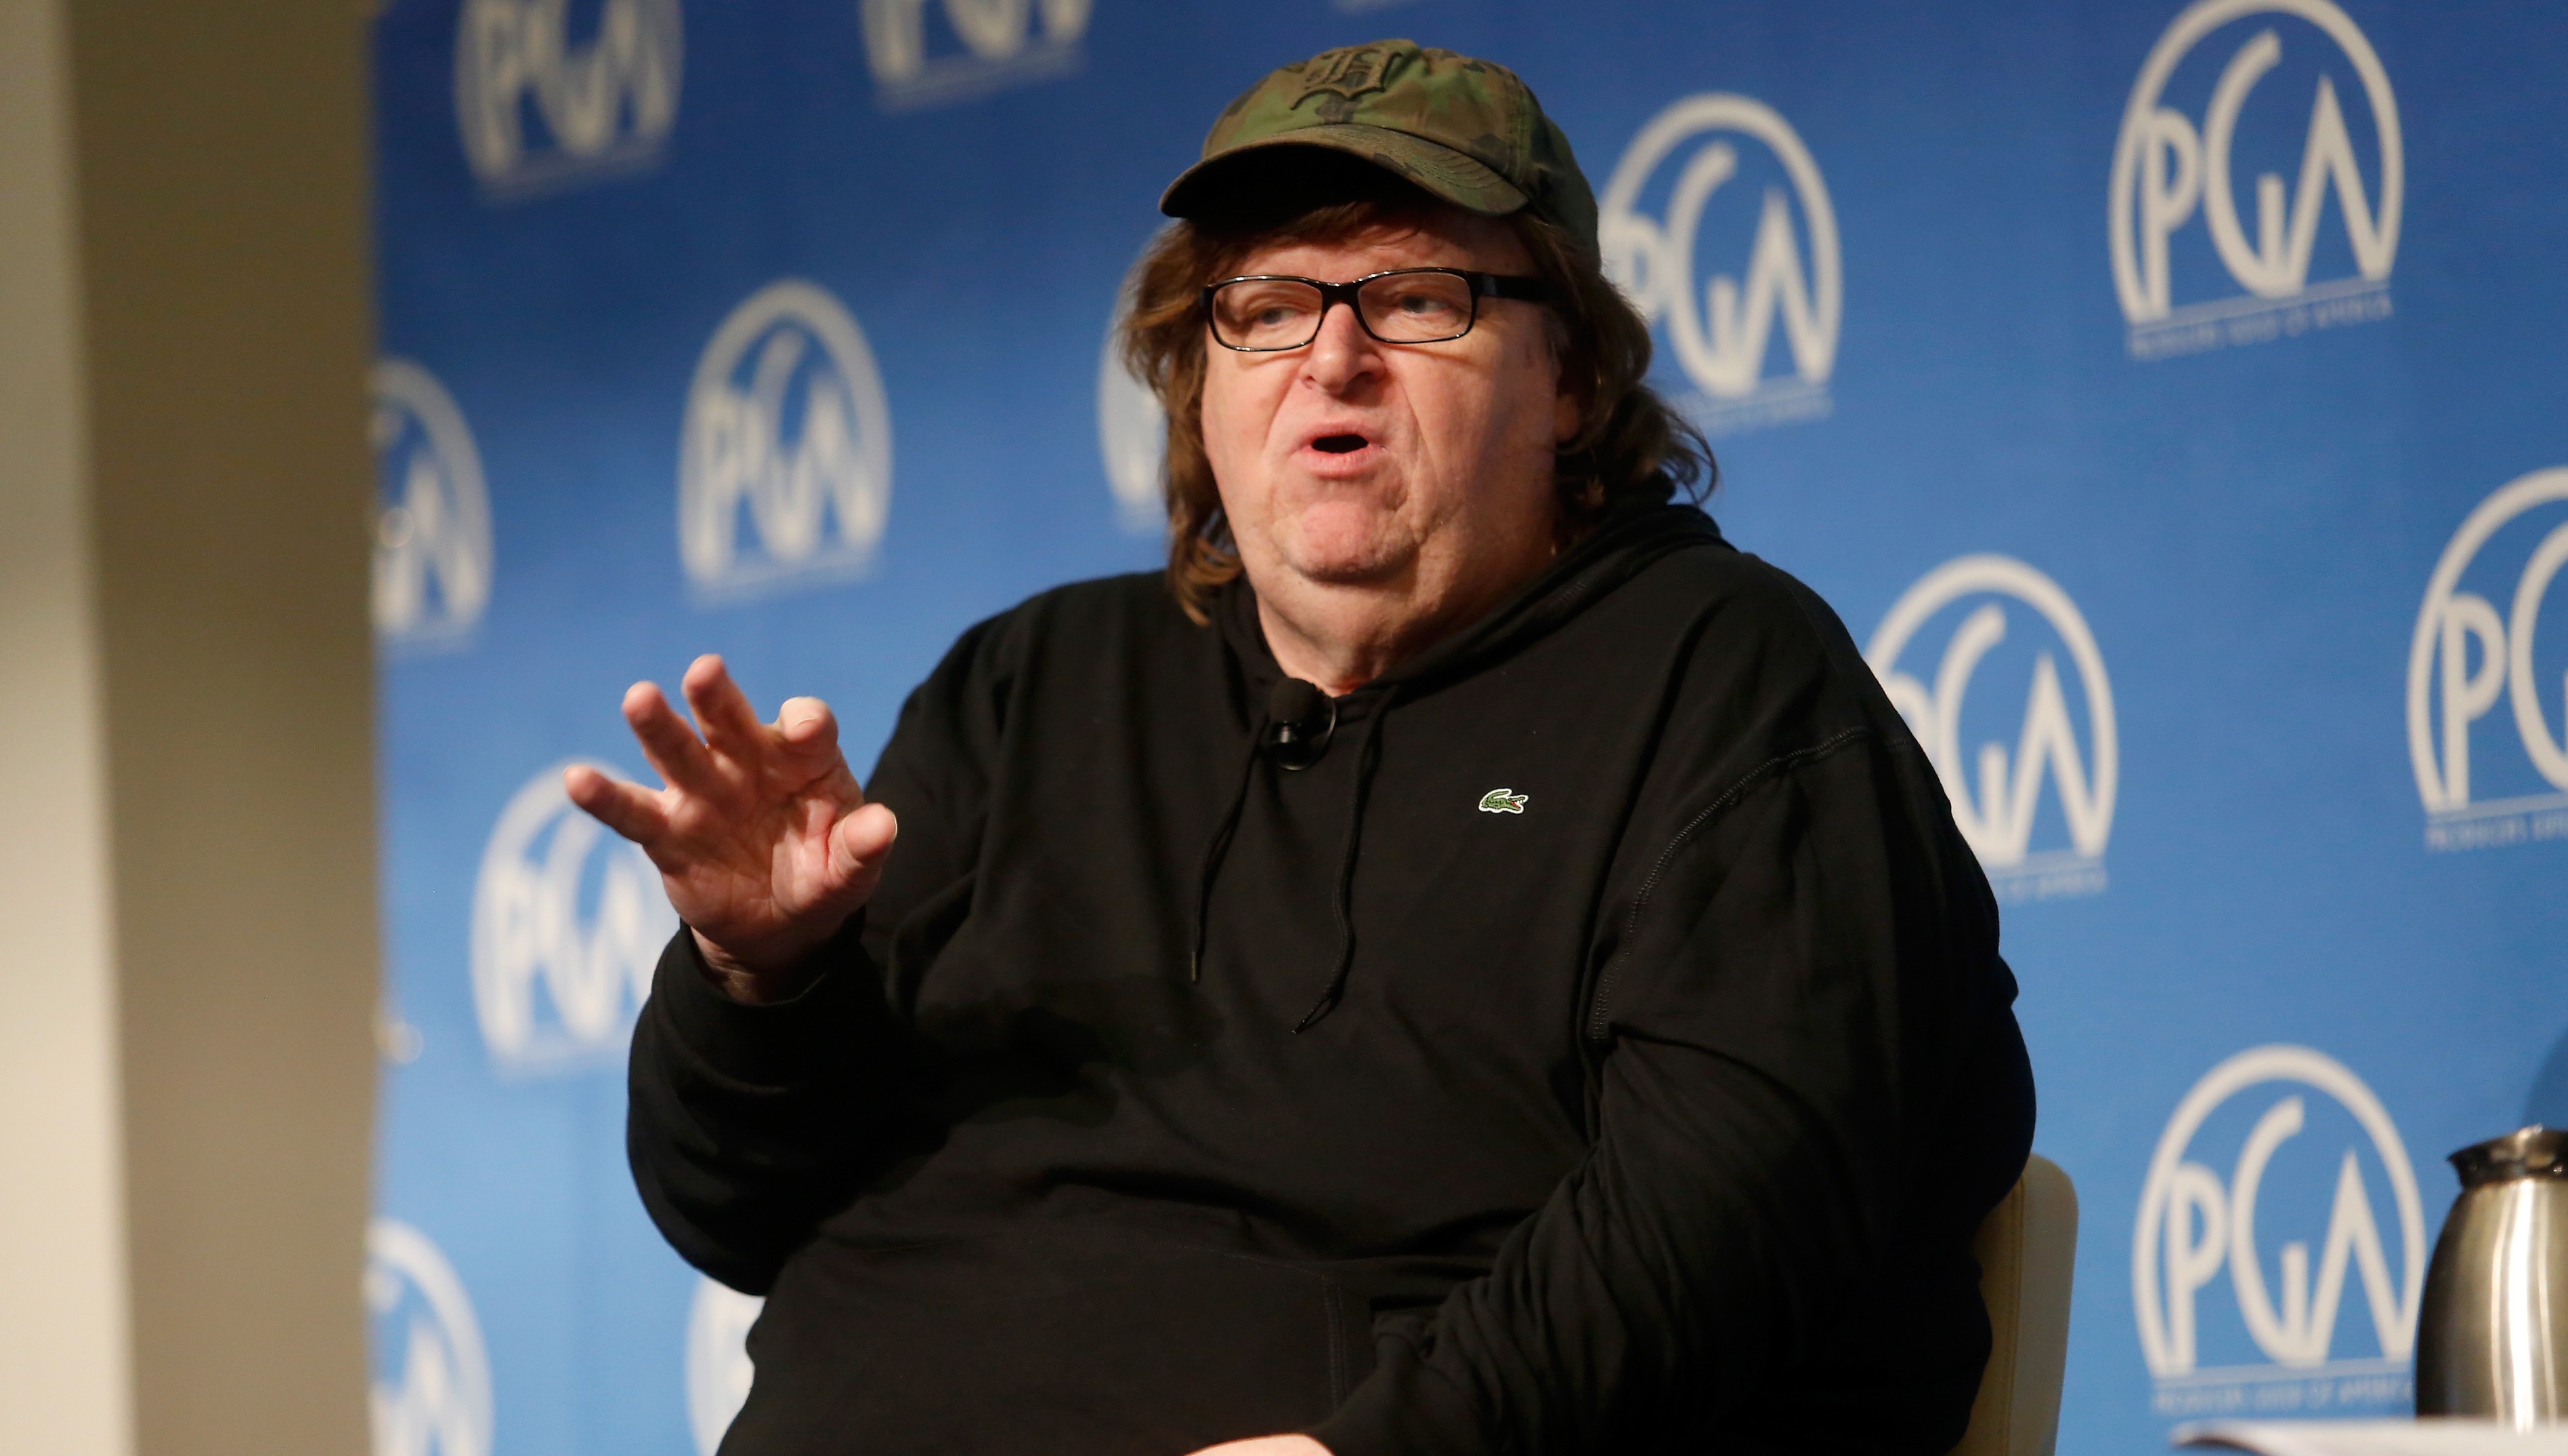 Filmmaker Michael Moore says Donald Trump won’t last four years